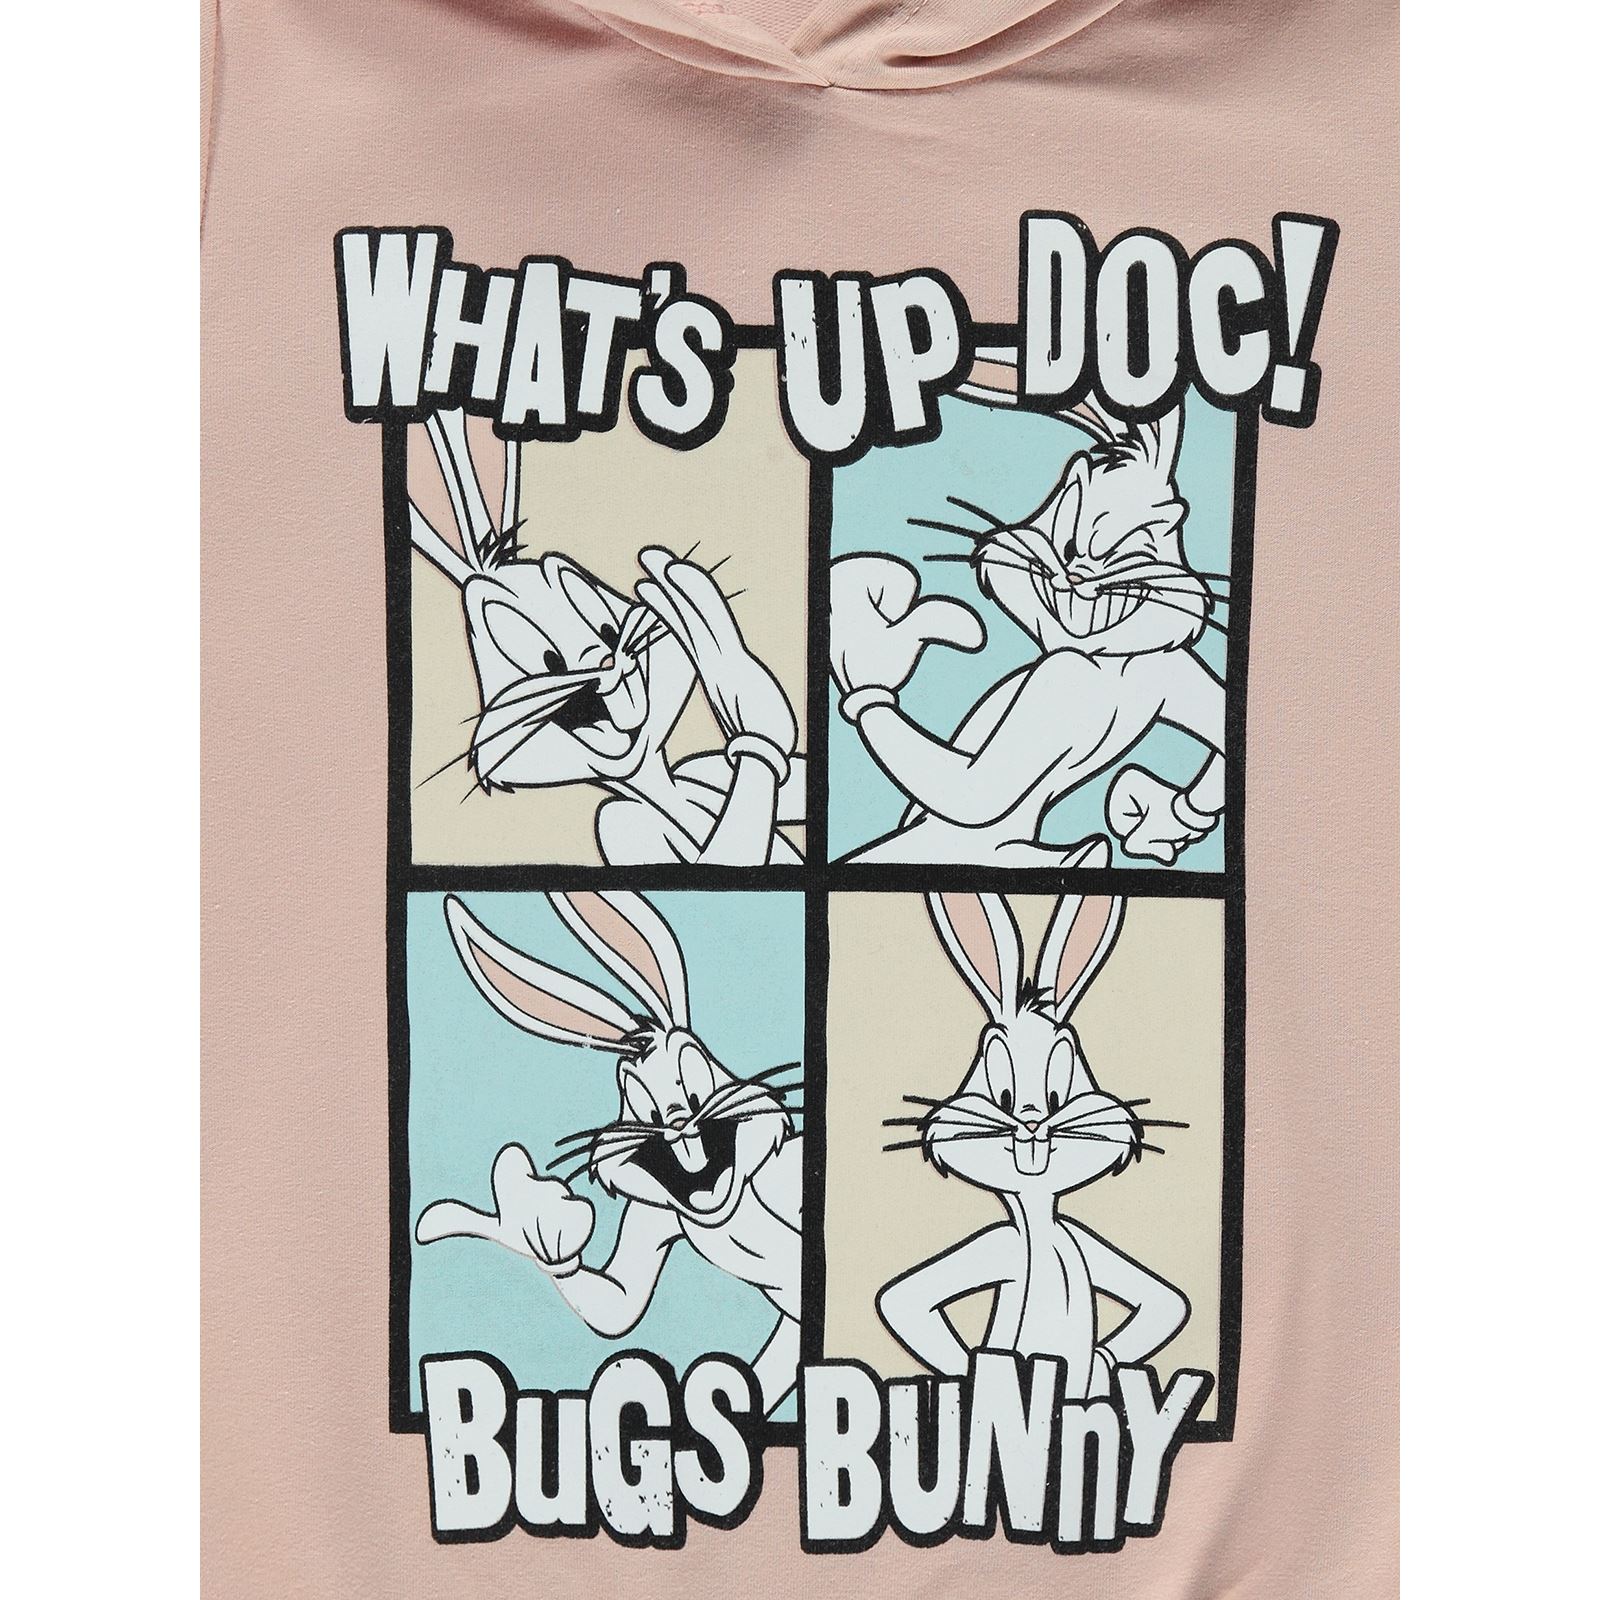 Bugs Bunny Kız Çocuk Kapüşonlu Sweatshirt 6-9 Yaş Pudra